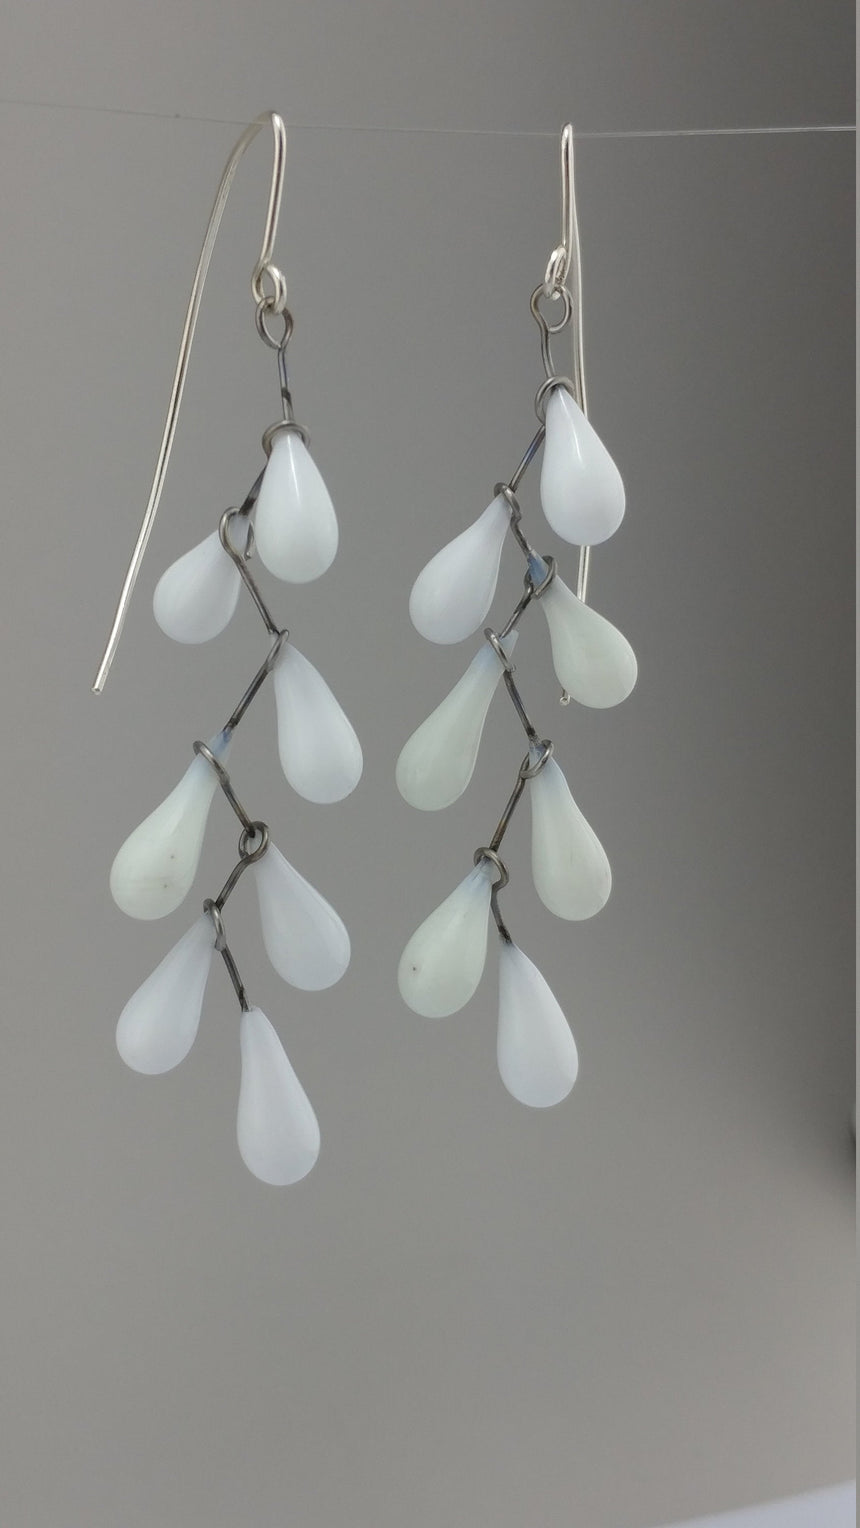 White glass chandelier earrings, white droplet chandelier, kinetic earrings, statement earrings